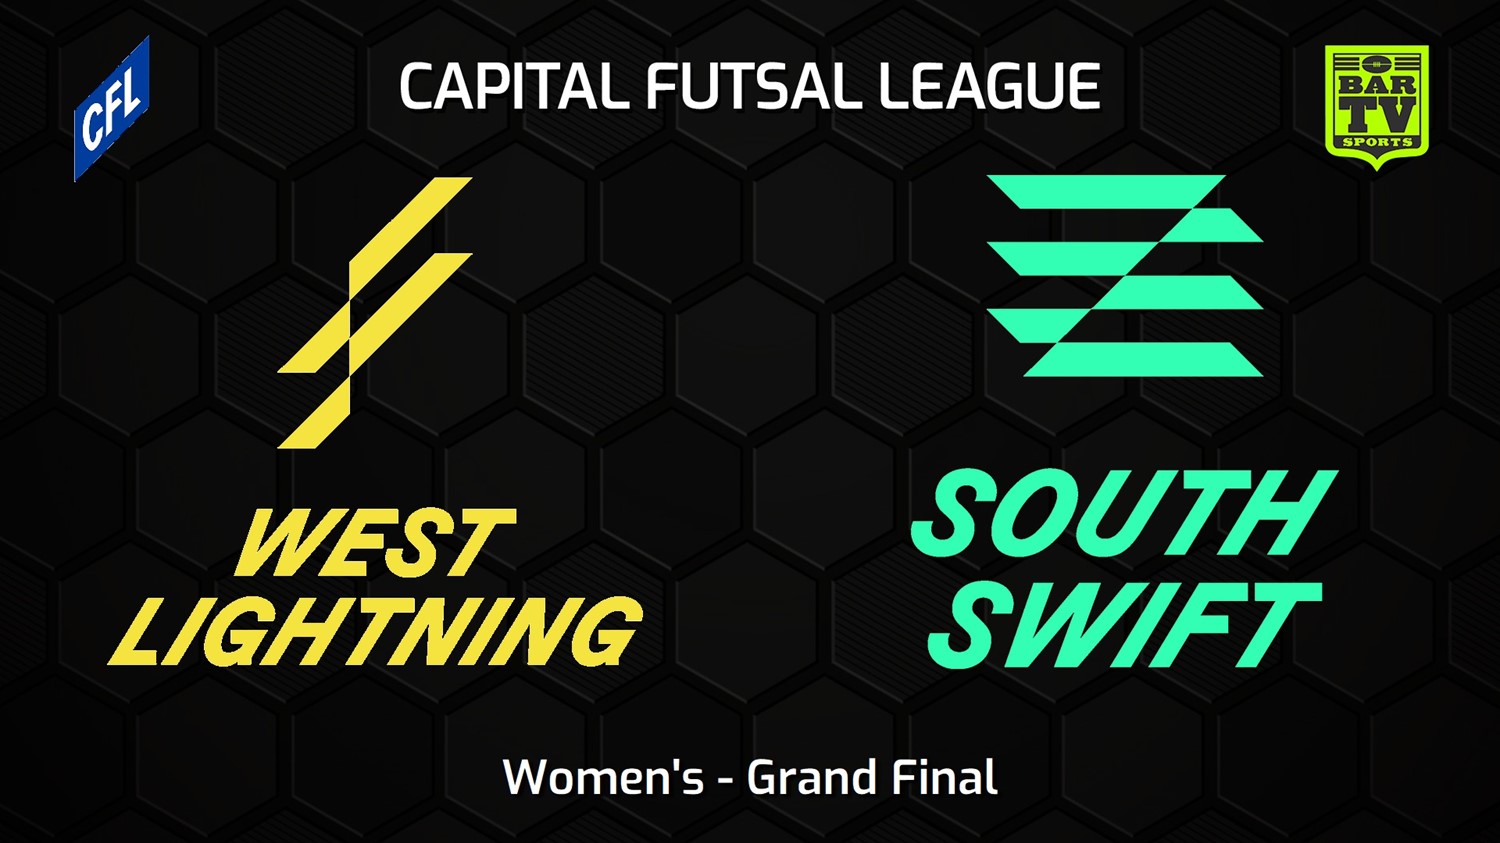 240211-Capital Football Futsal Grand Final - Women's - West Canberra Lightning v South Canberra Swift Minigame Slate Image